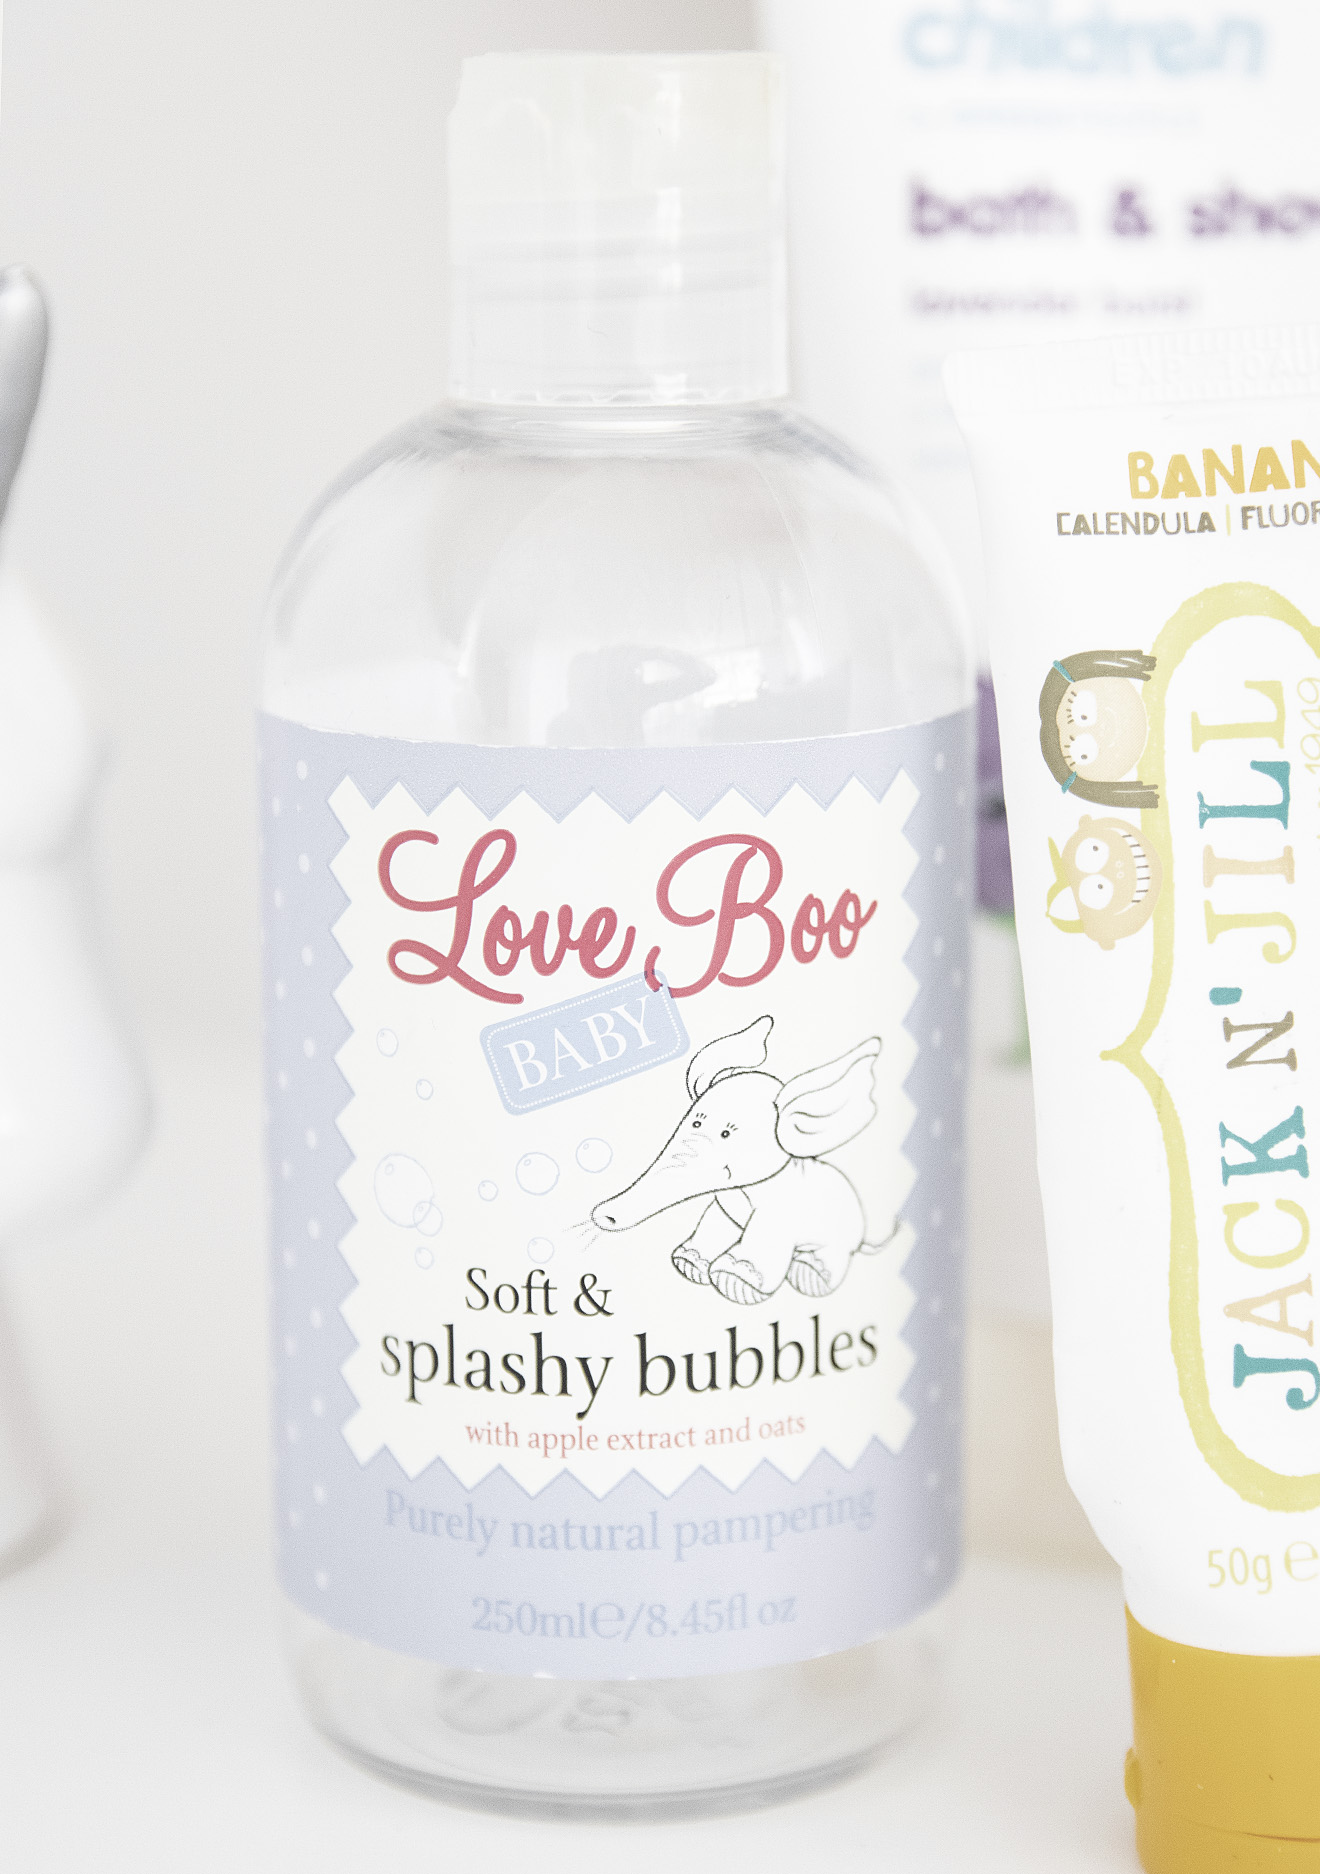 Love Boo Baby Natural Bath Bubbles